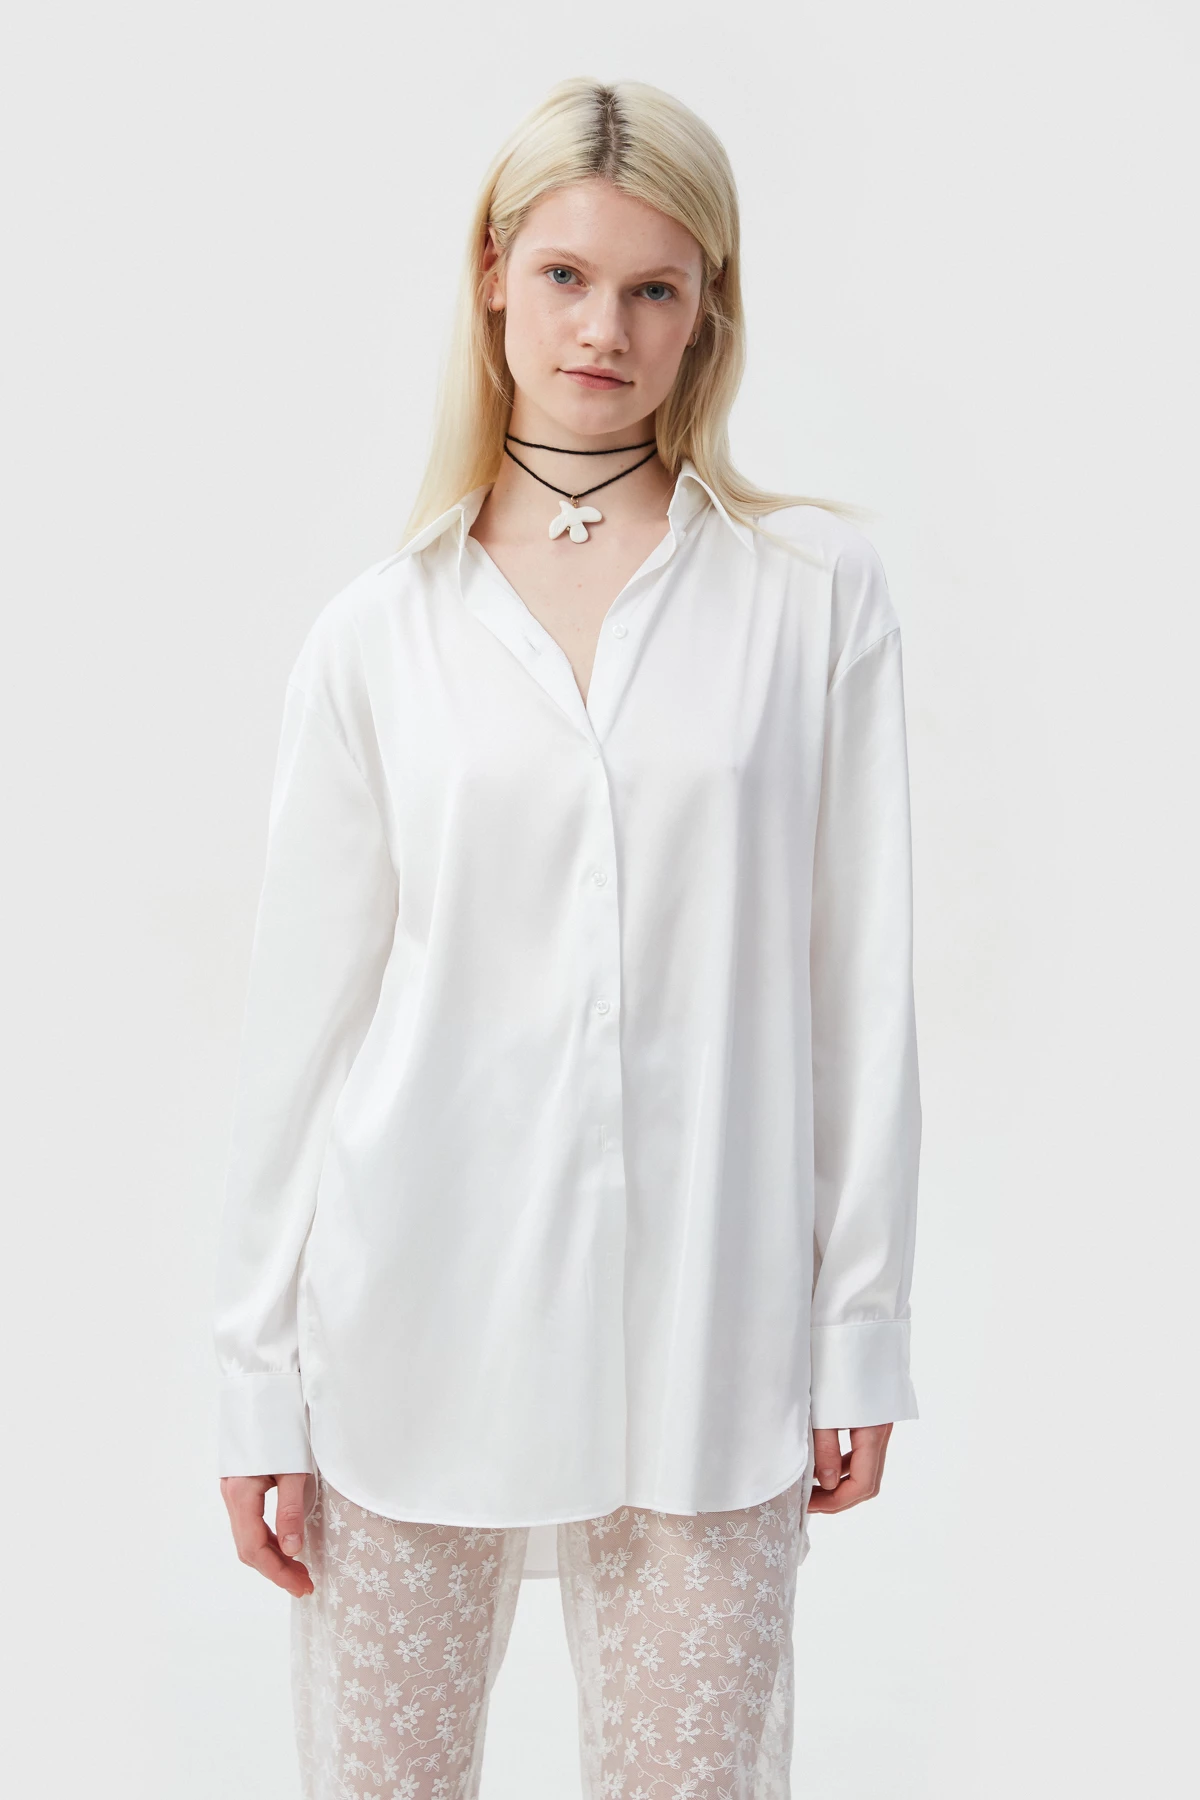 Milky loose-fit elongated satin shirt, photo 1